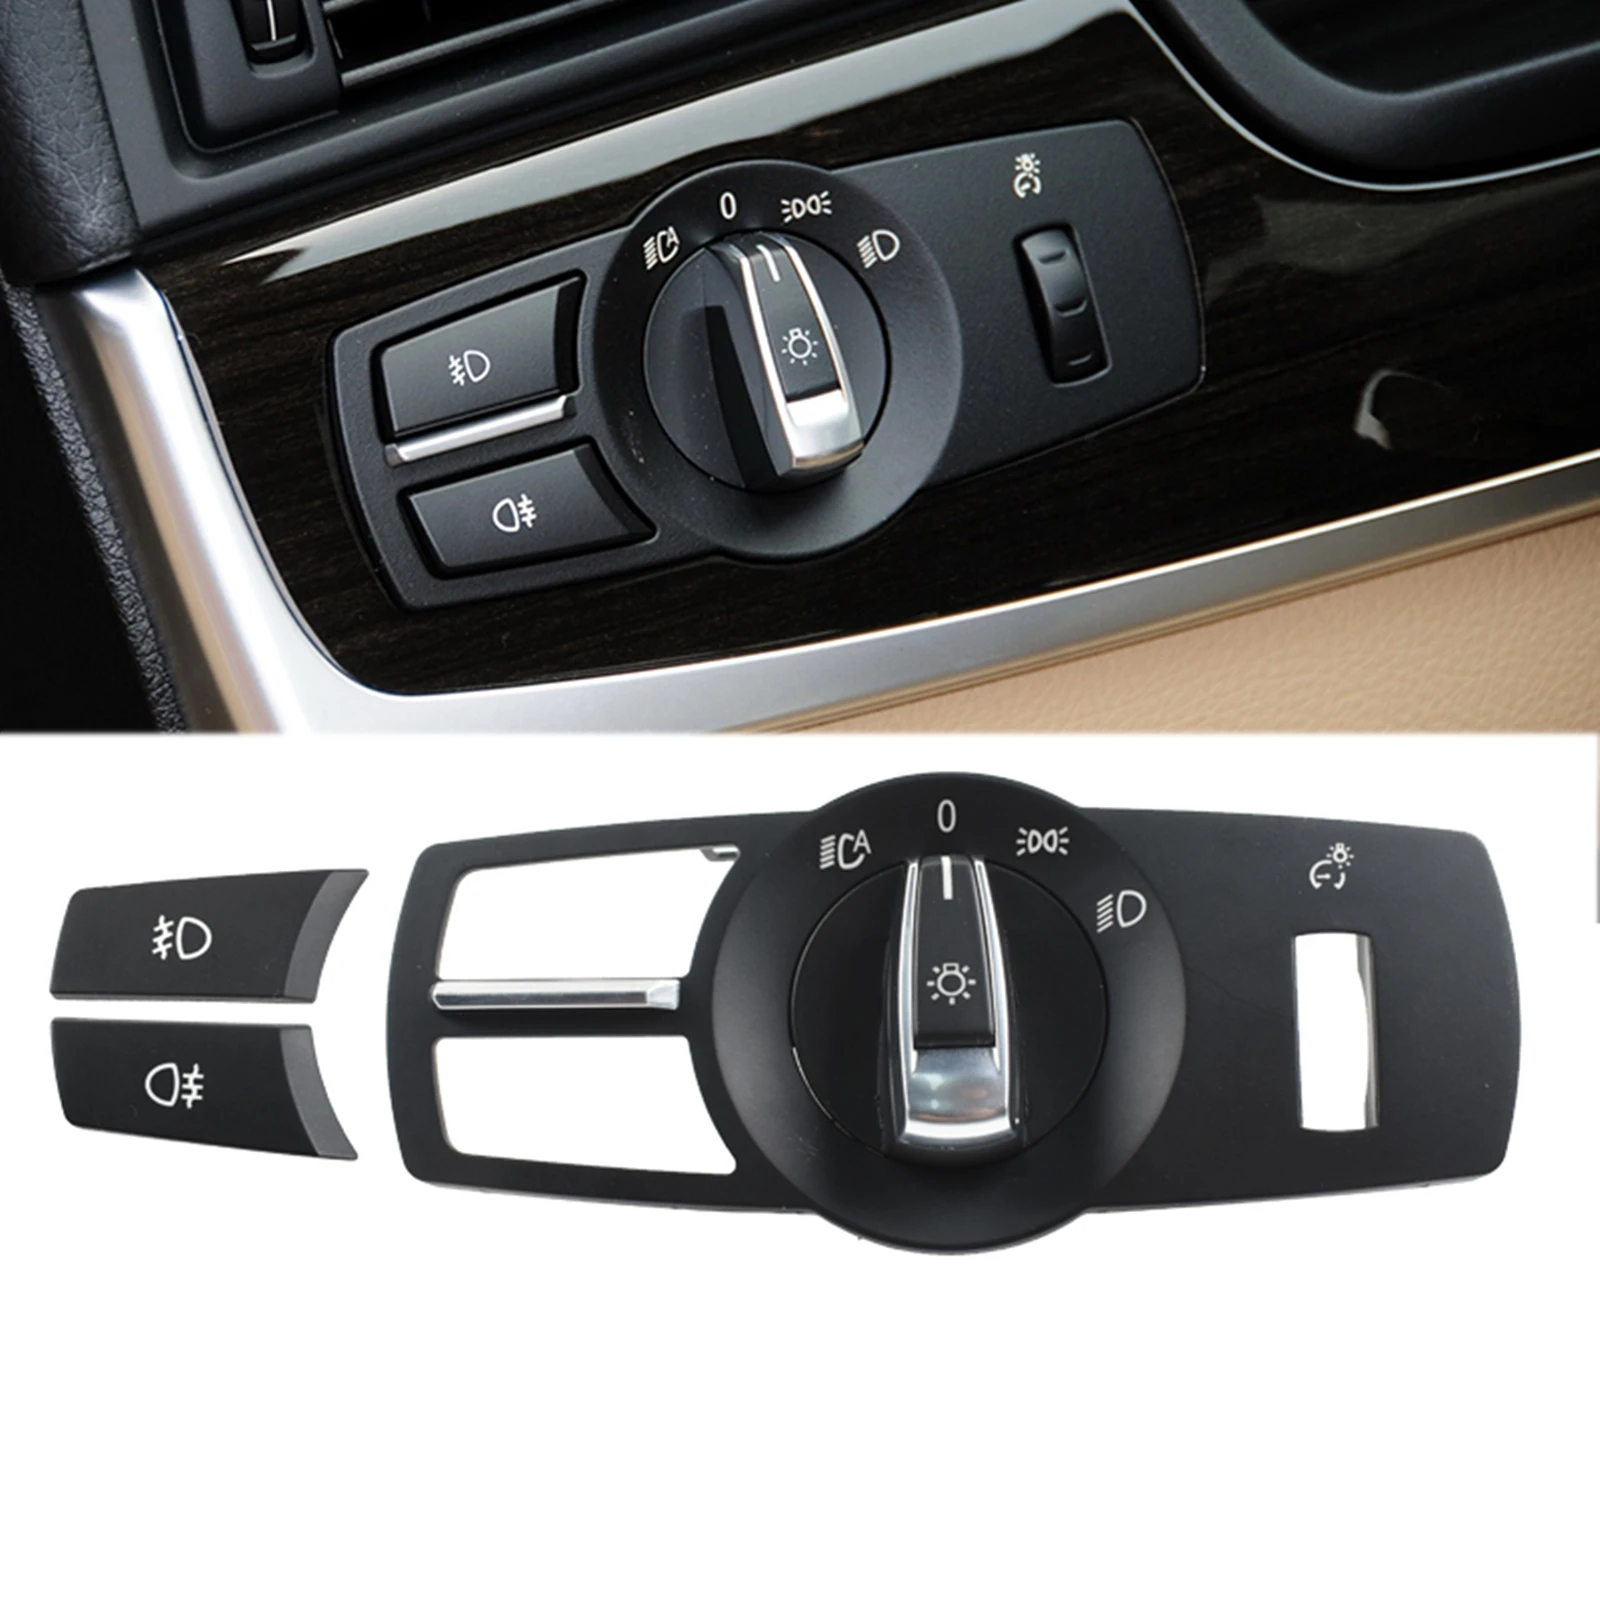 

4pcs/Set Kit For BMW 5 Series GT 535 Car Headlight Headlamp Control Switch Panel+Button+Key Knob Black Advance Version